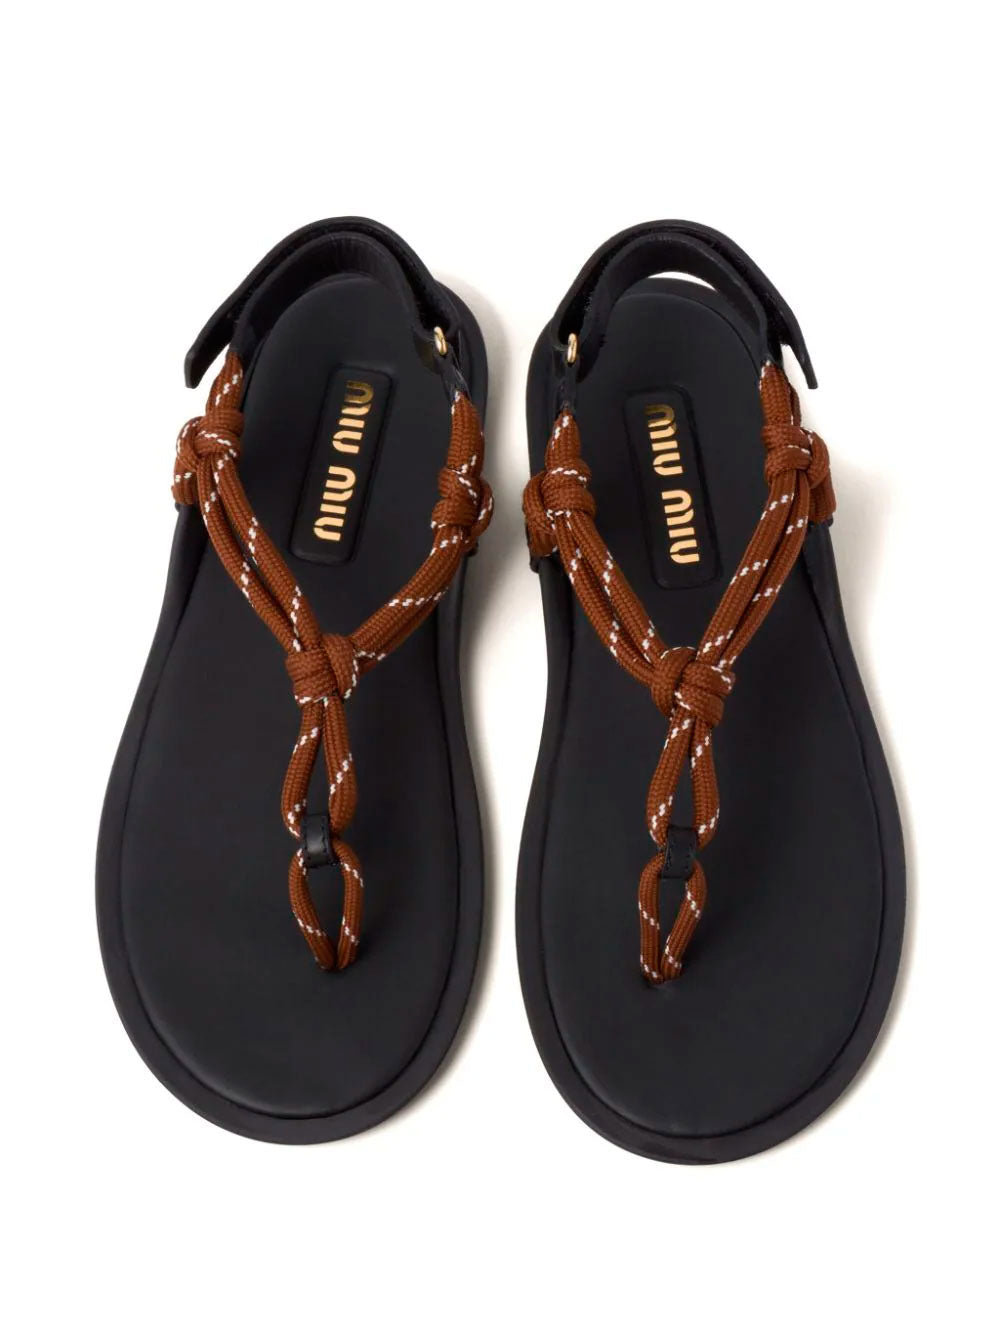 Cord-strap sandals